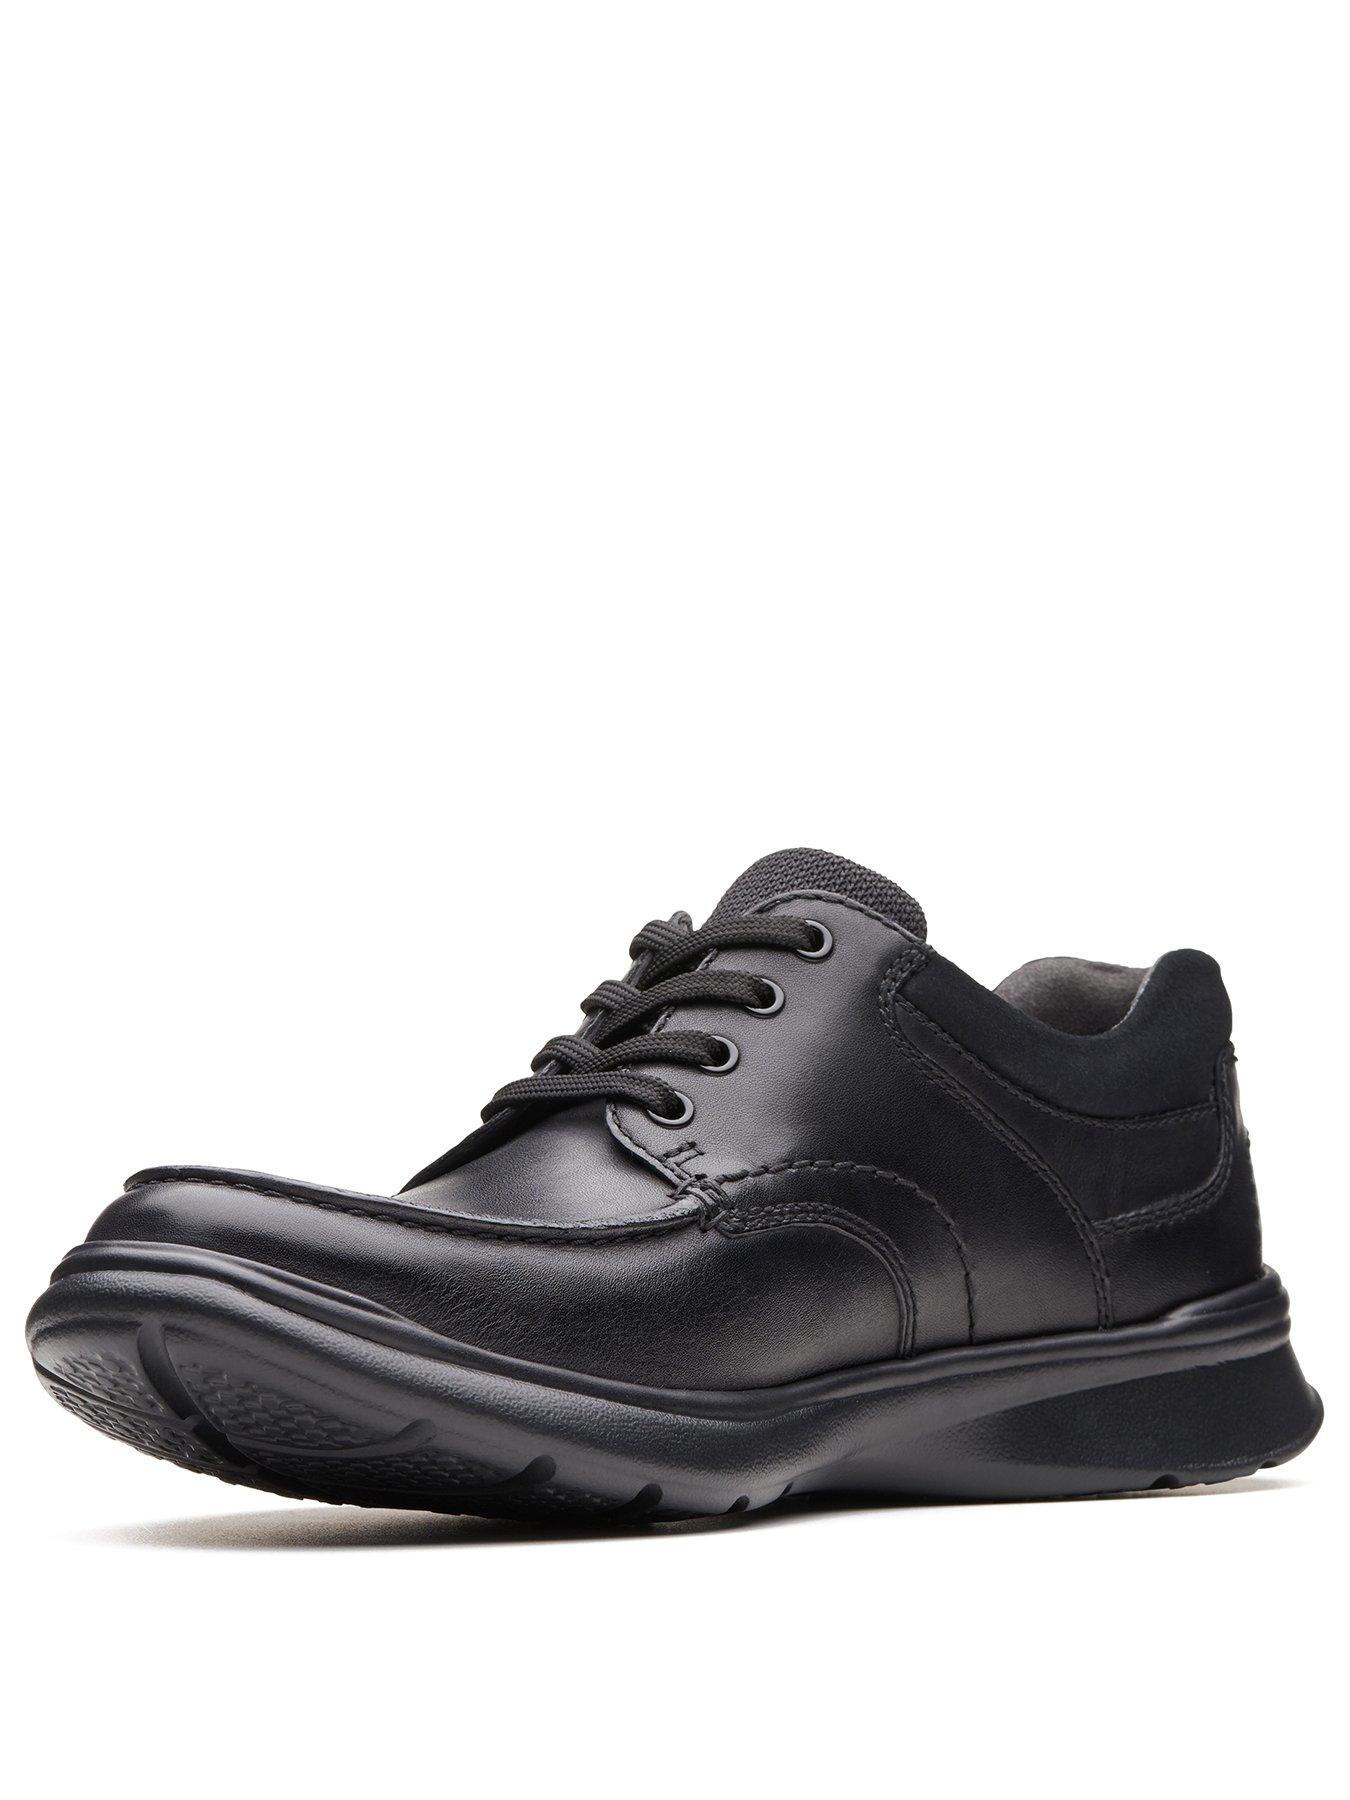 Shoes & boots Cotrell Edge Wide Fit Shoes - Black